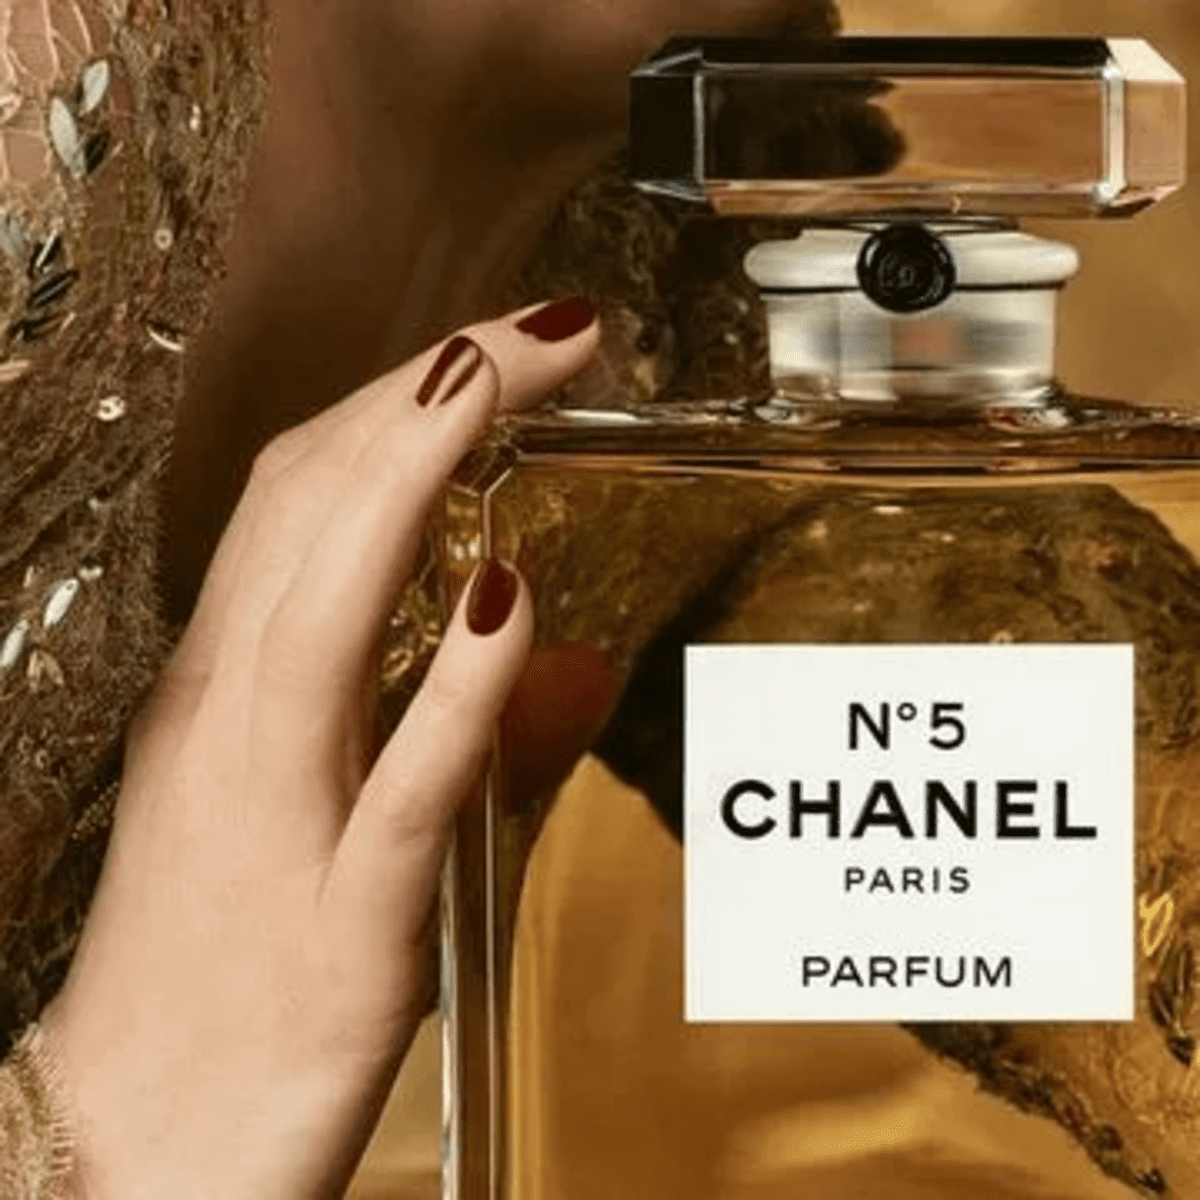 Chanel No. 5 Perfume Alternative for Women - Composition - TAJ Brand